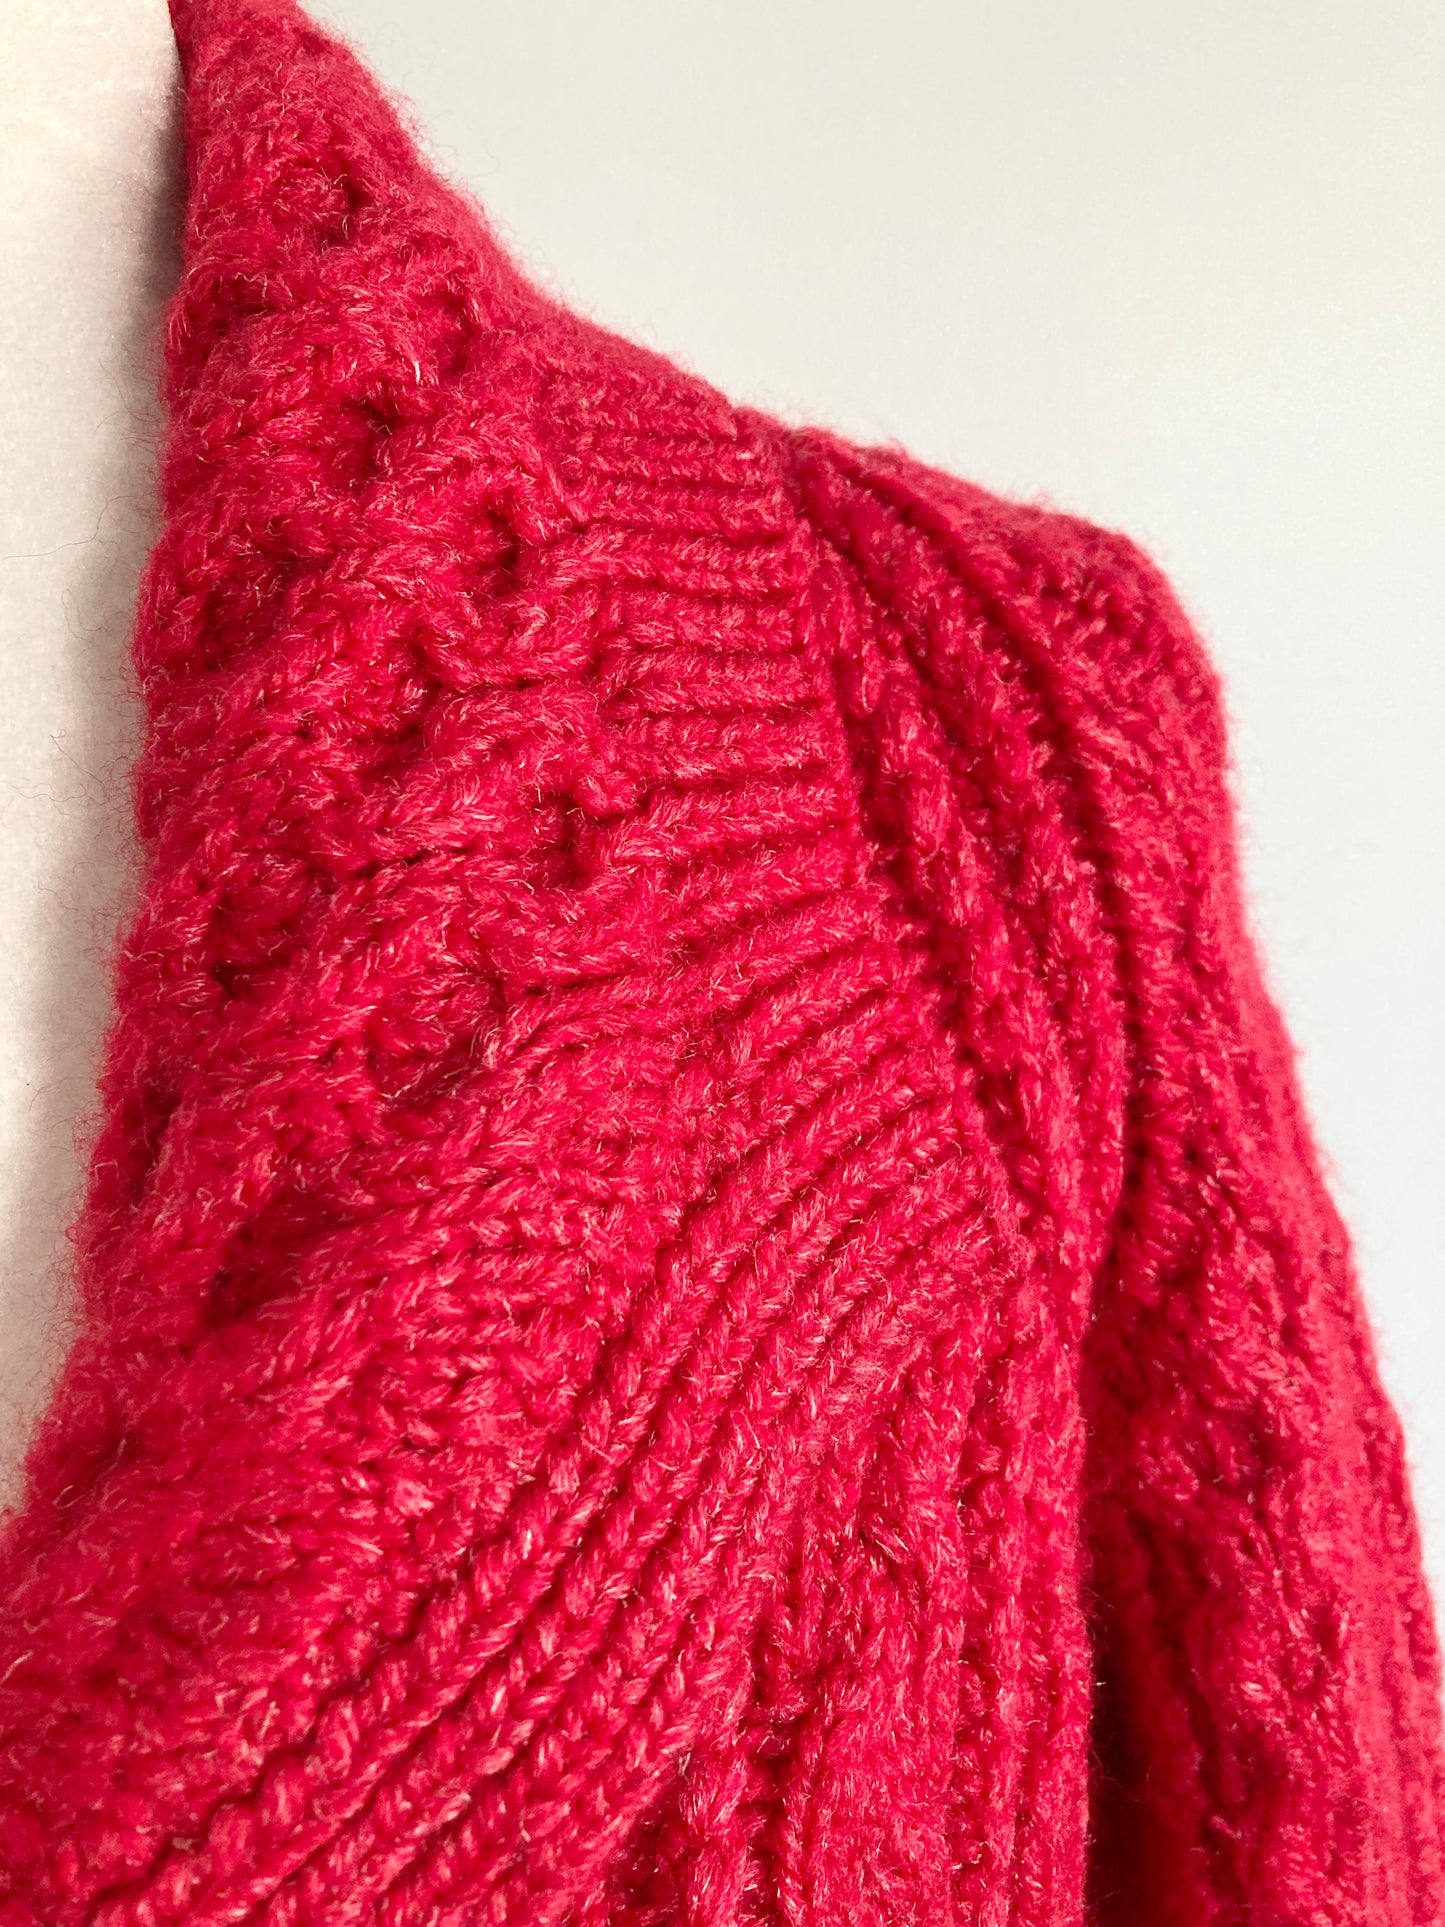 Vintage Hand Knit Red Tone Aran Cardigan, Size M/L